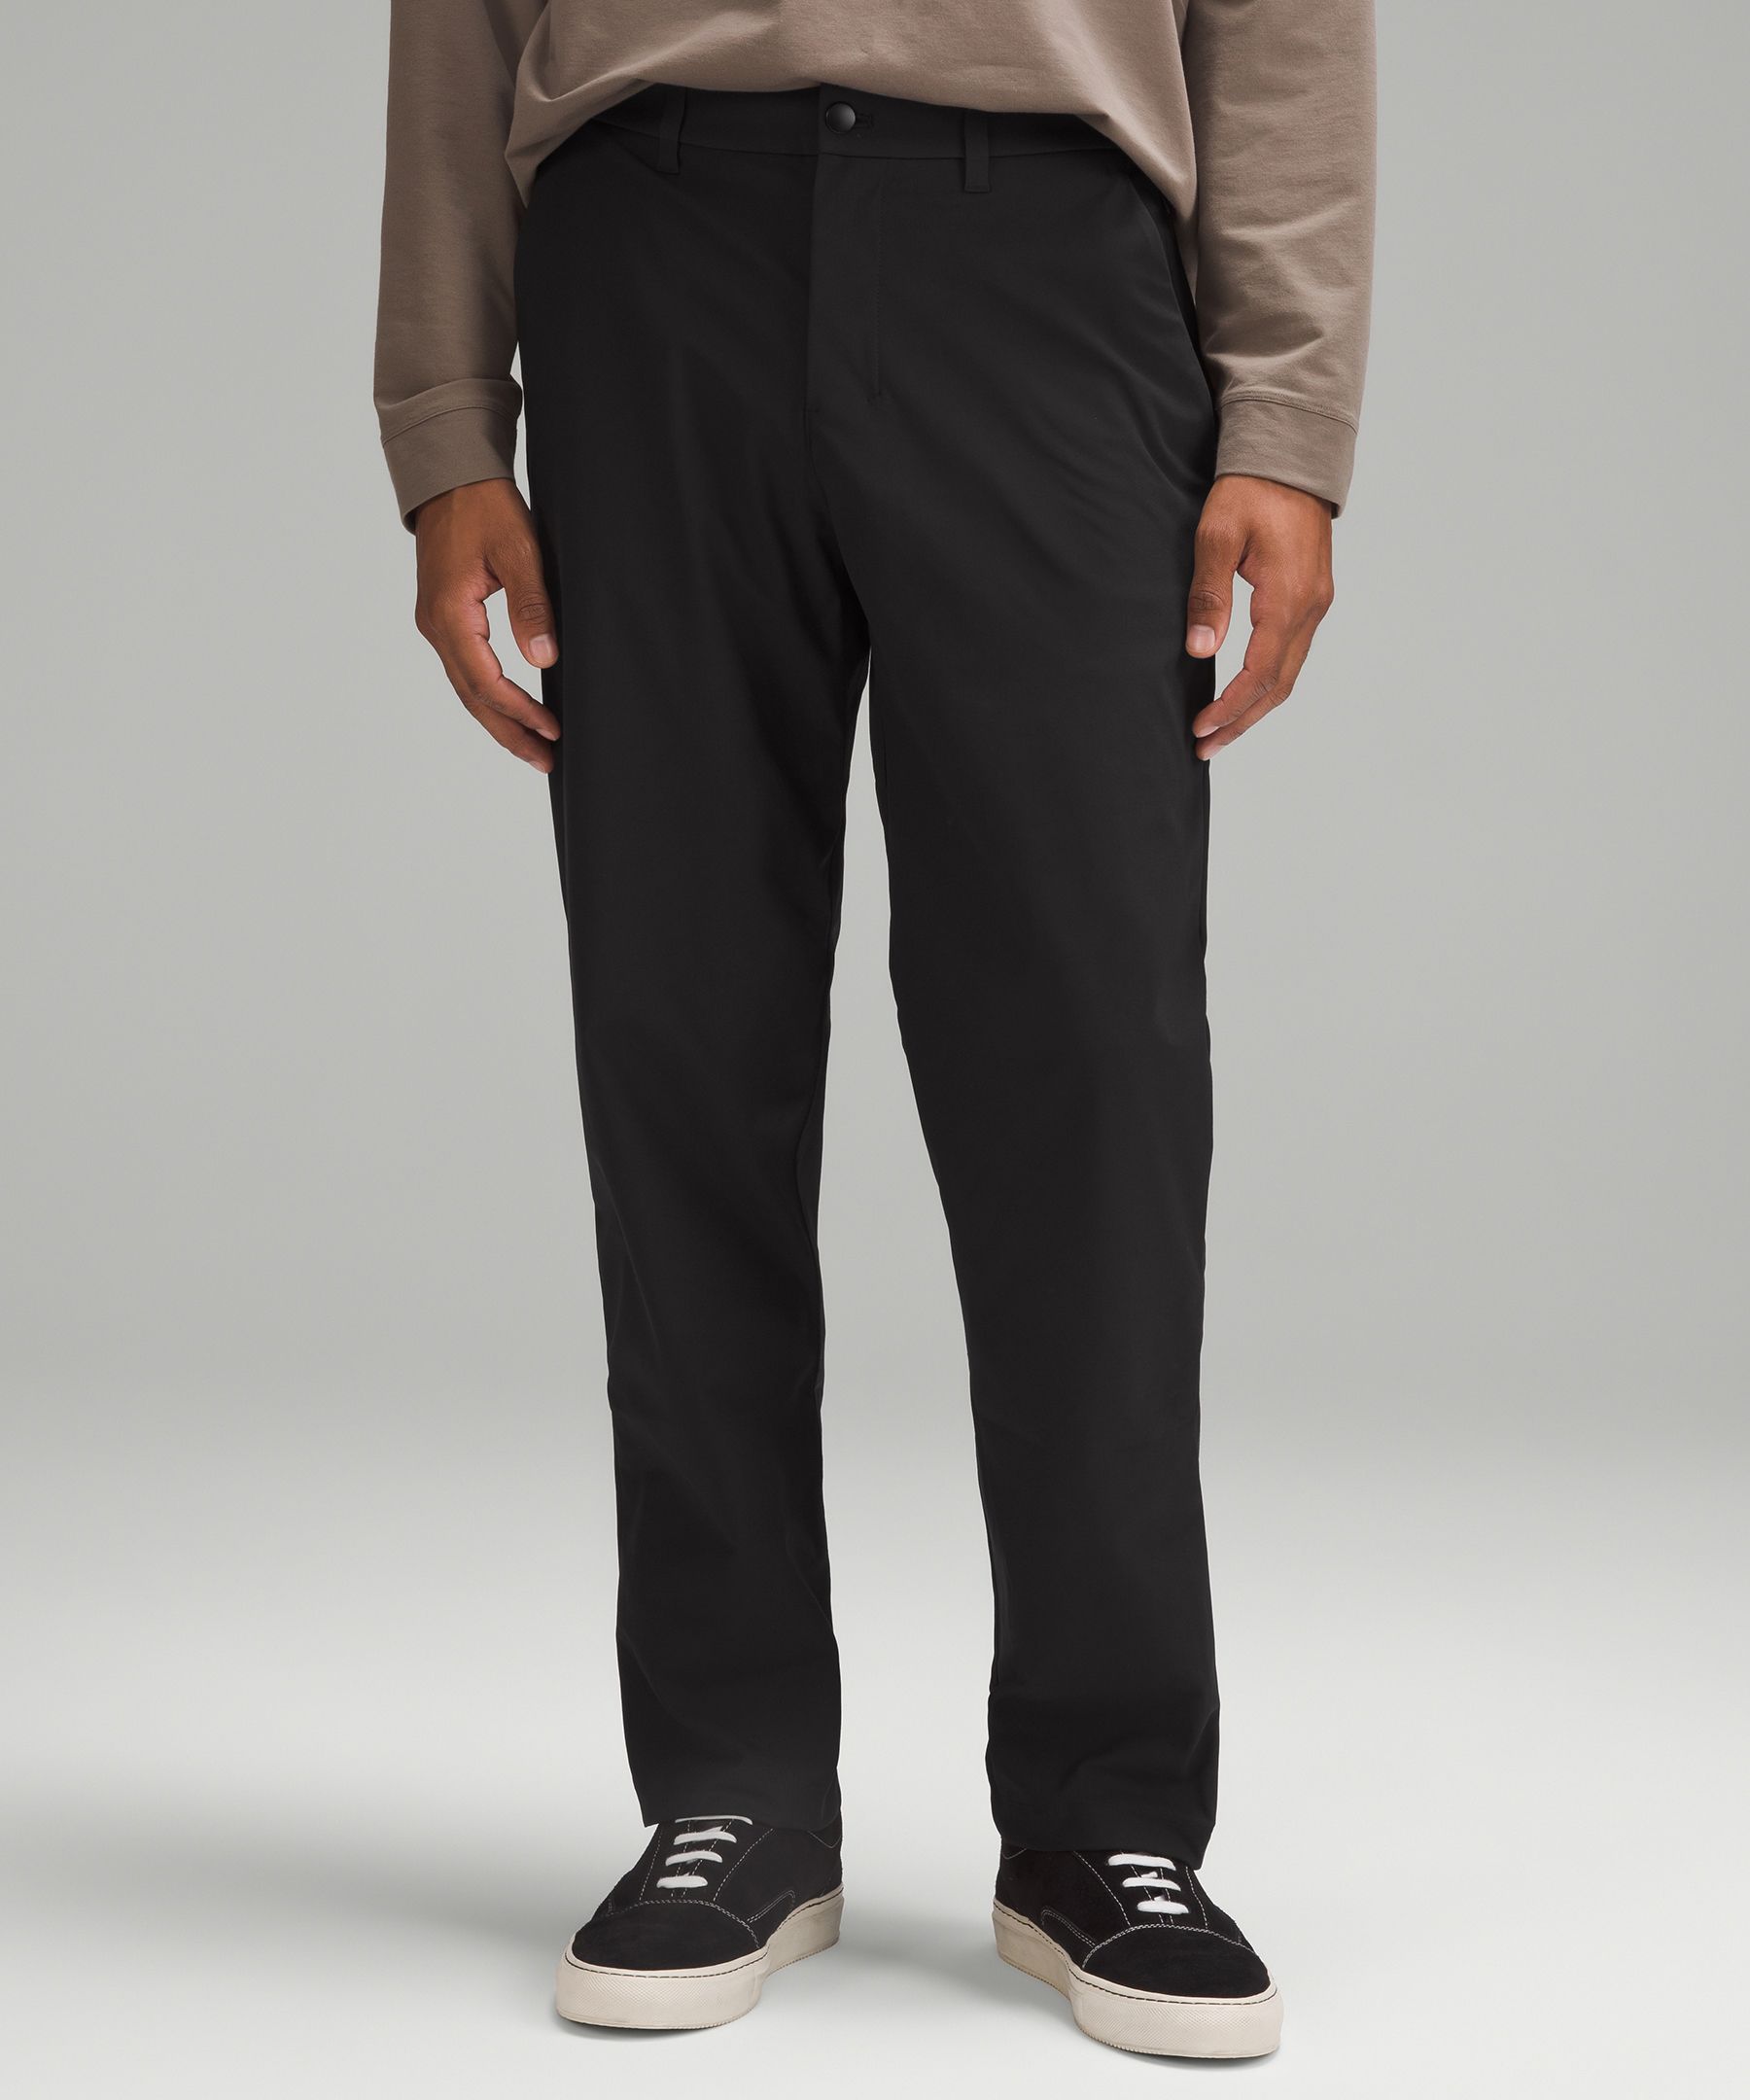 Trousers for Men  lululemon Canada